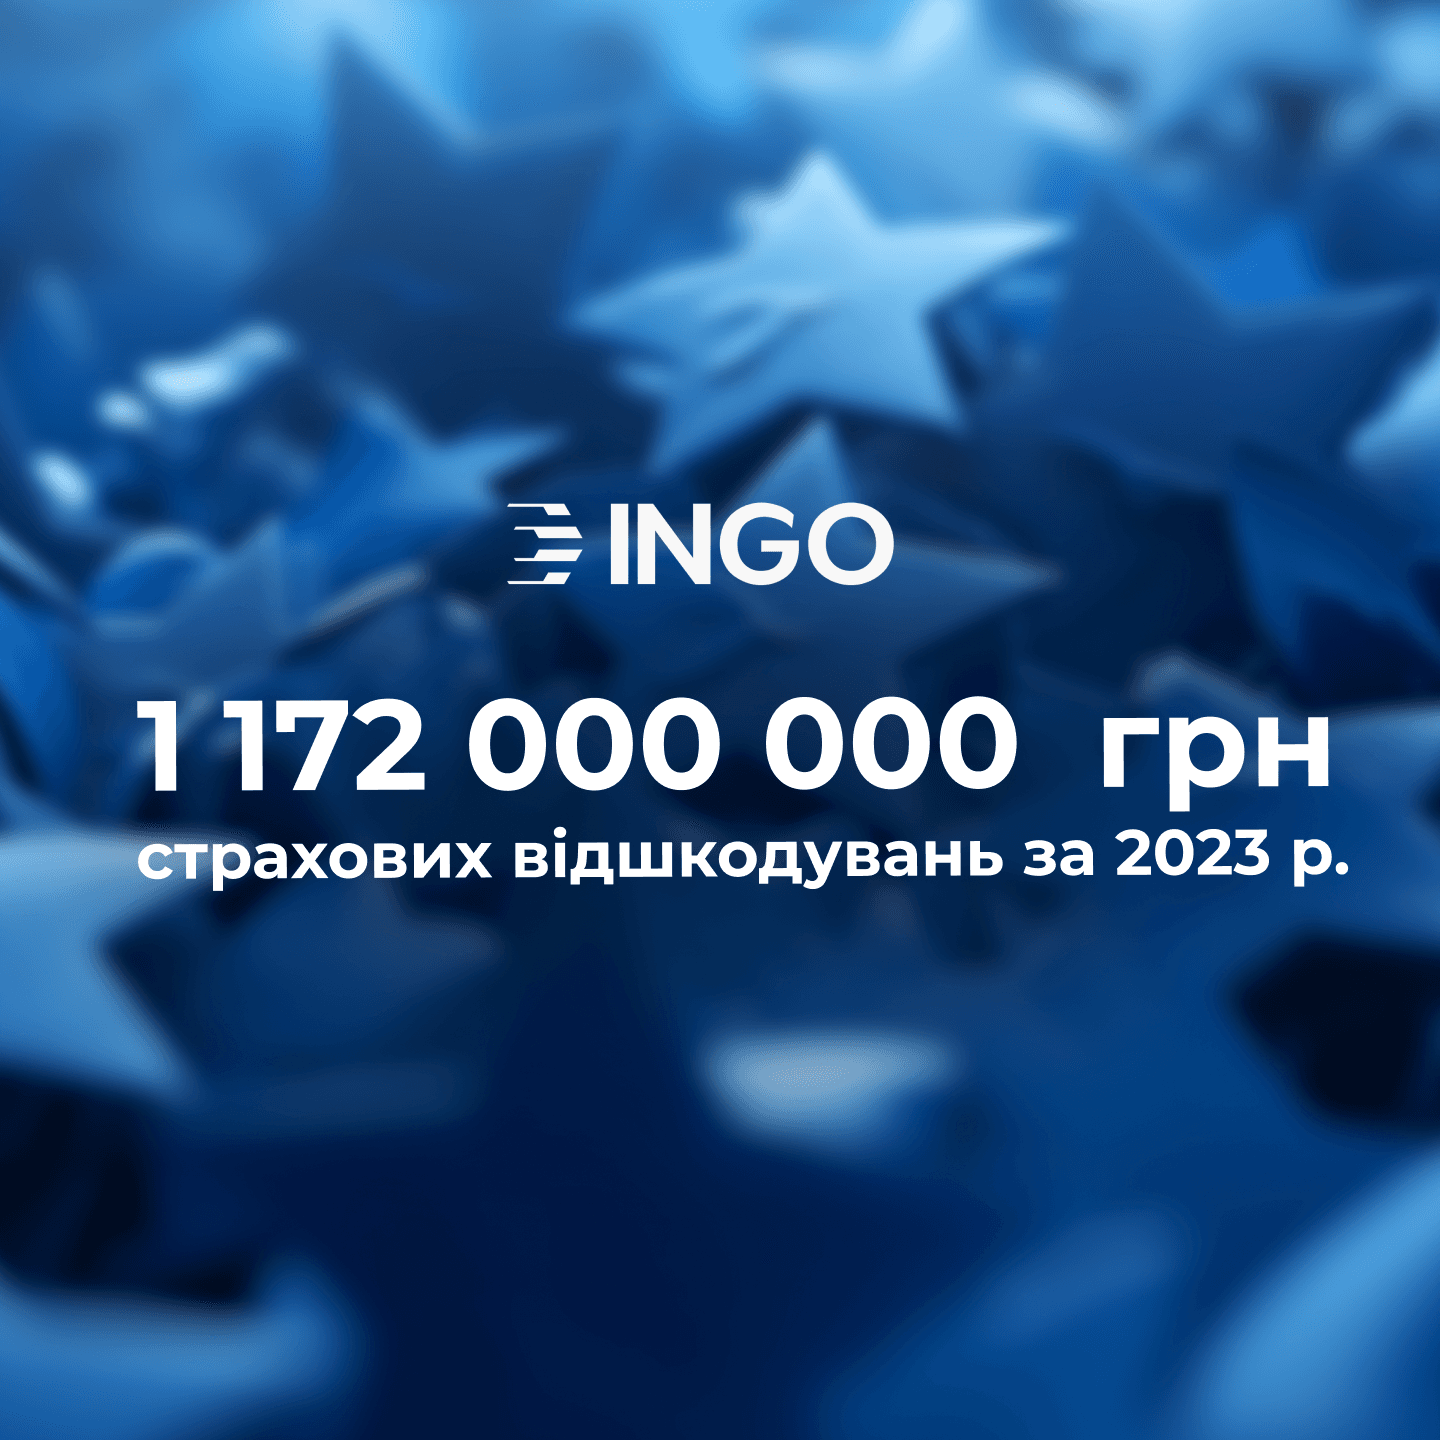 In 2023, INGO Paid UAH 1 Billion 172 Million of Insurance Indemnities to Ukrainians